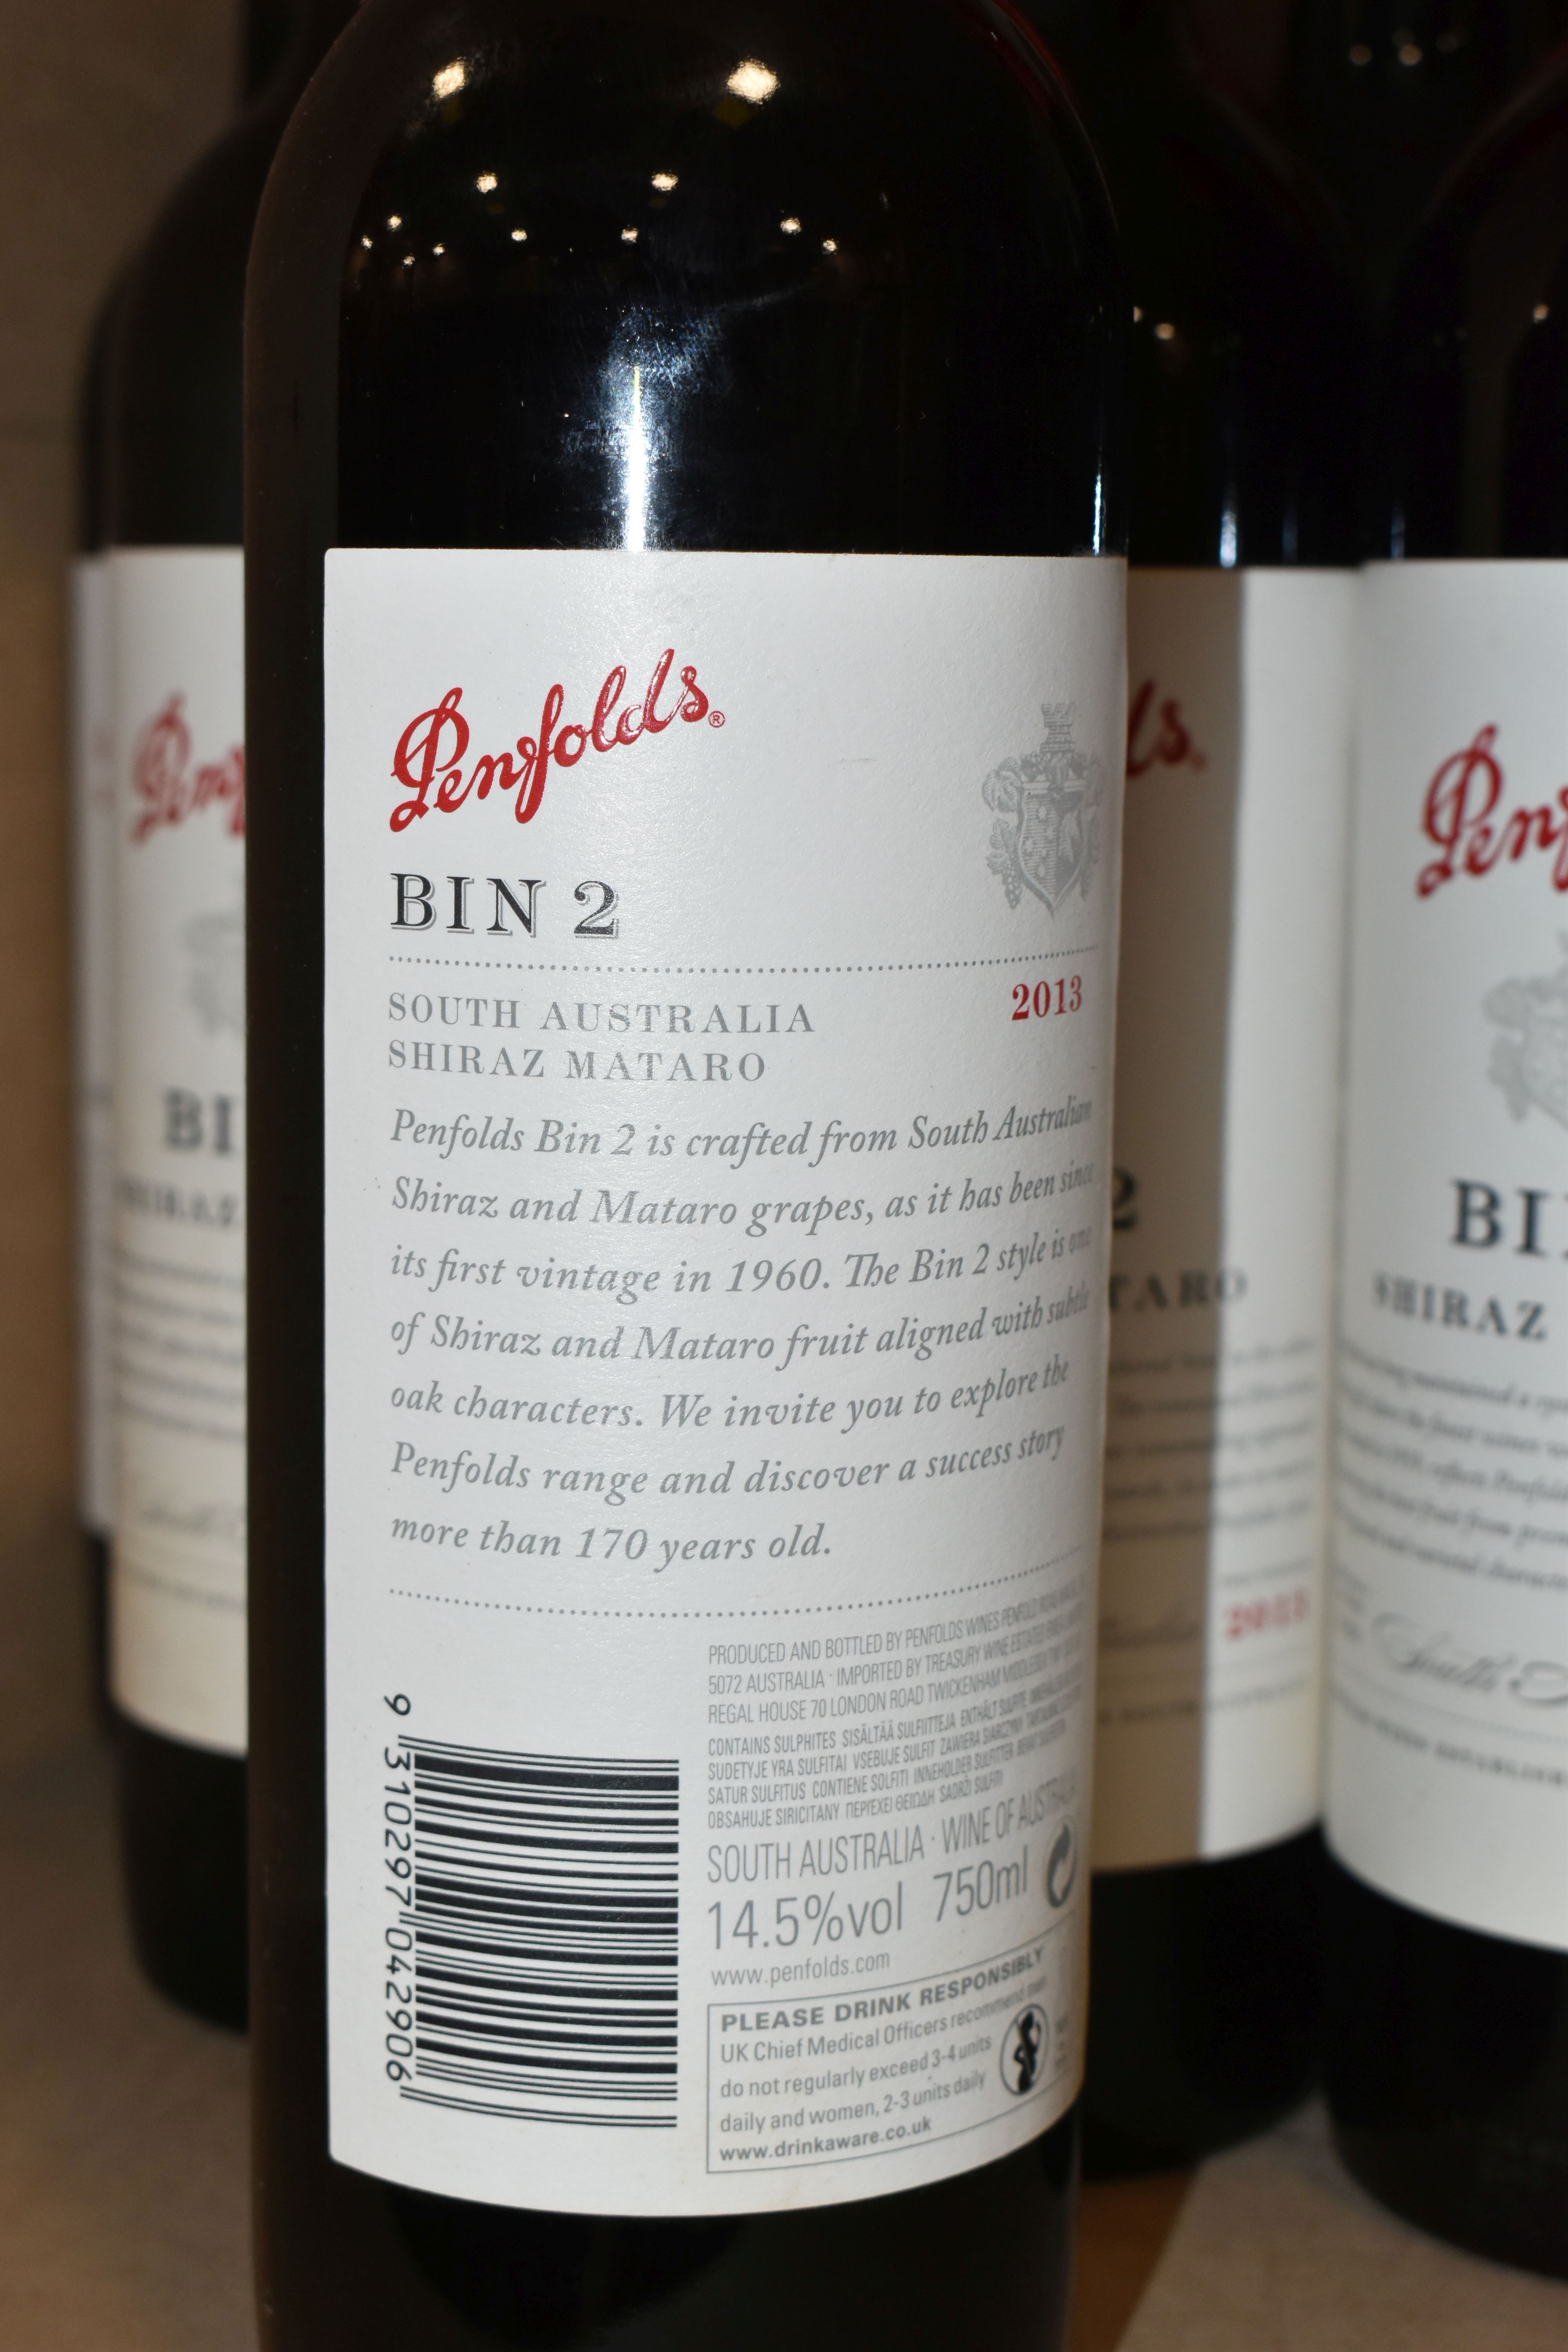 WINE, Twelve Bottles of PENFOLDS BIN 2 SHIRAZ MATARO 2013 (Aus) 14.5% vol. 750ml, all seals intact - Image 2 of 3